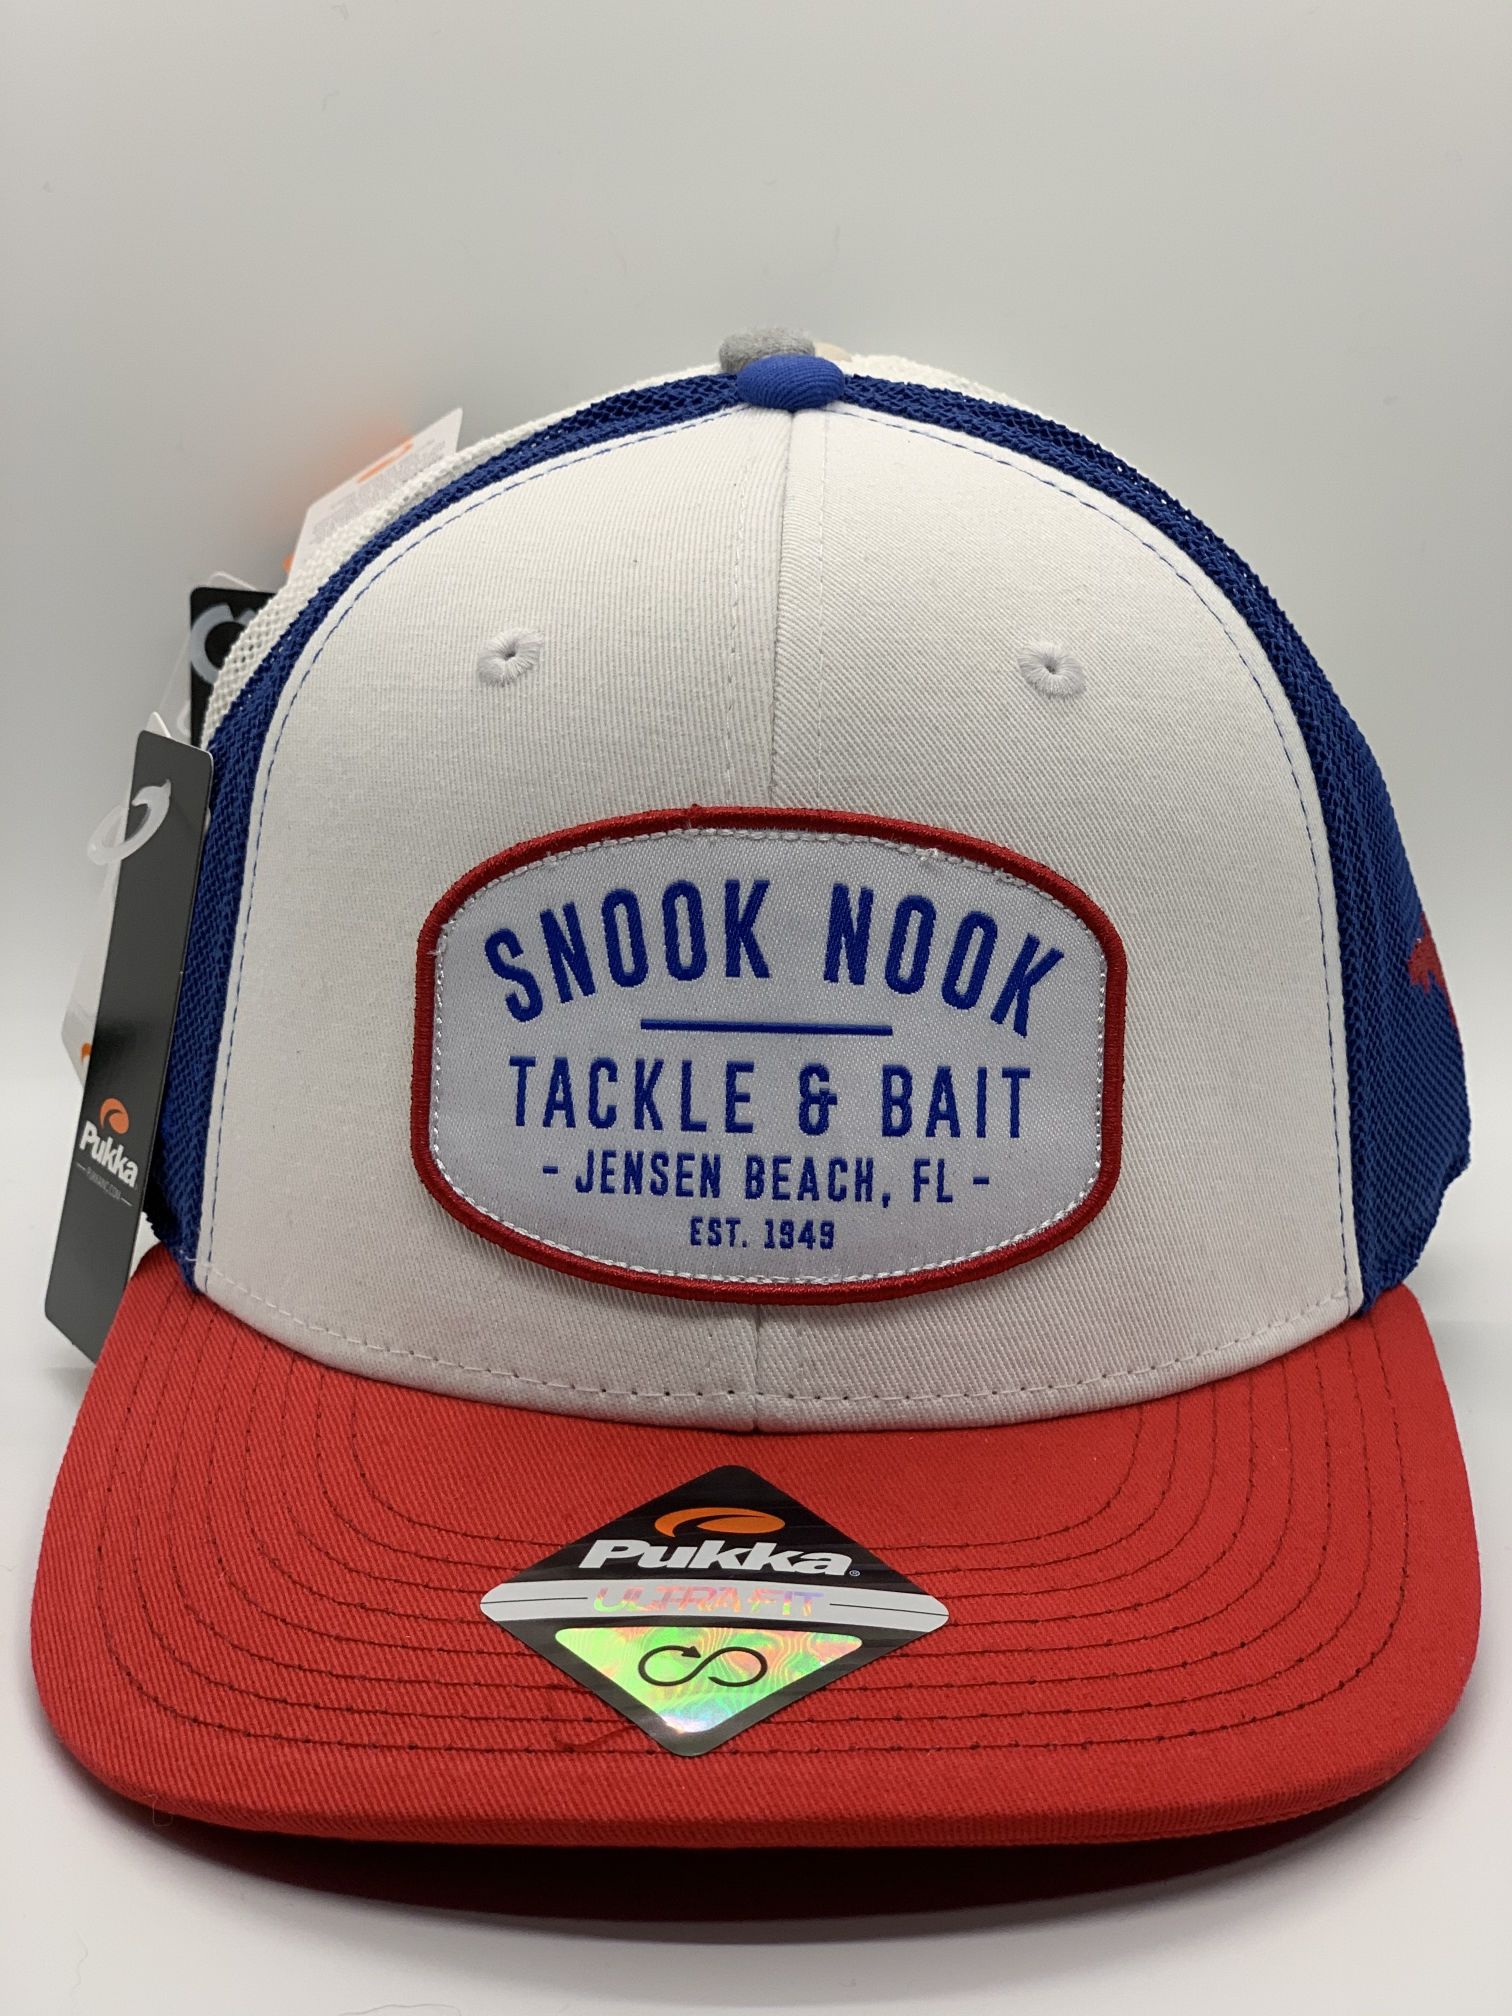 Snook Nook Tackle & Bait Mesh Snapback - Snook Nook Bait & Tackle ...